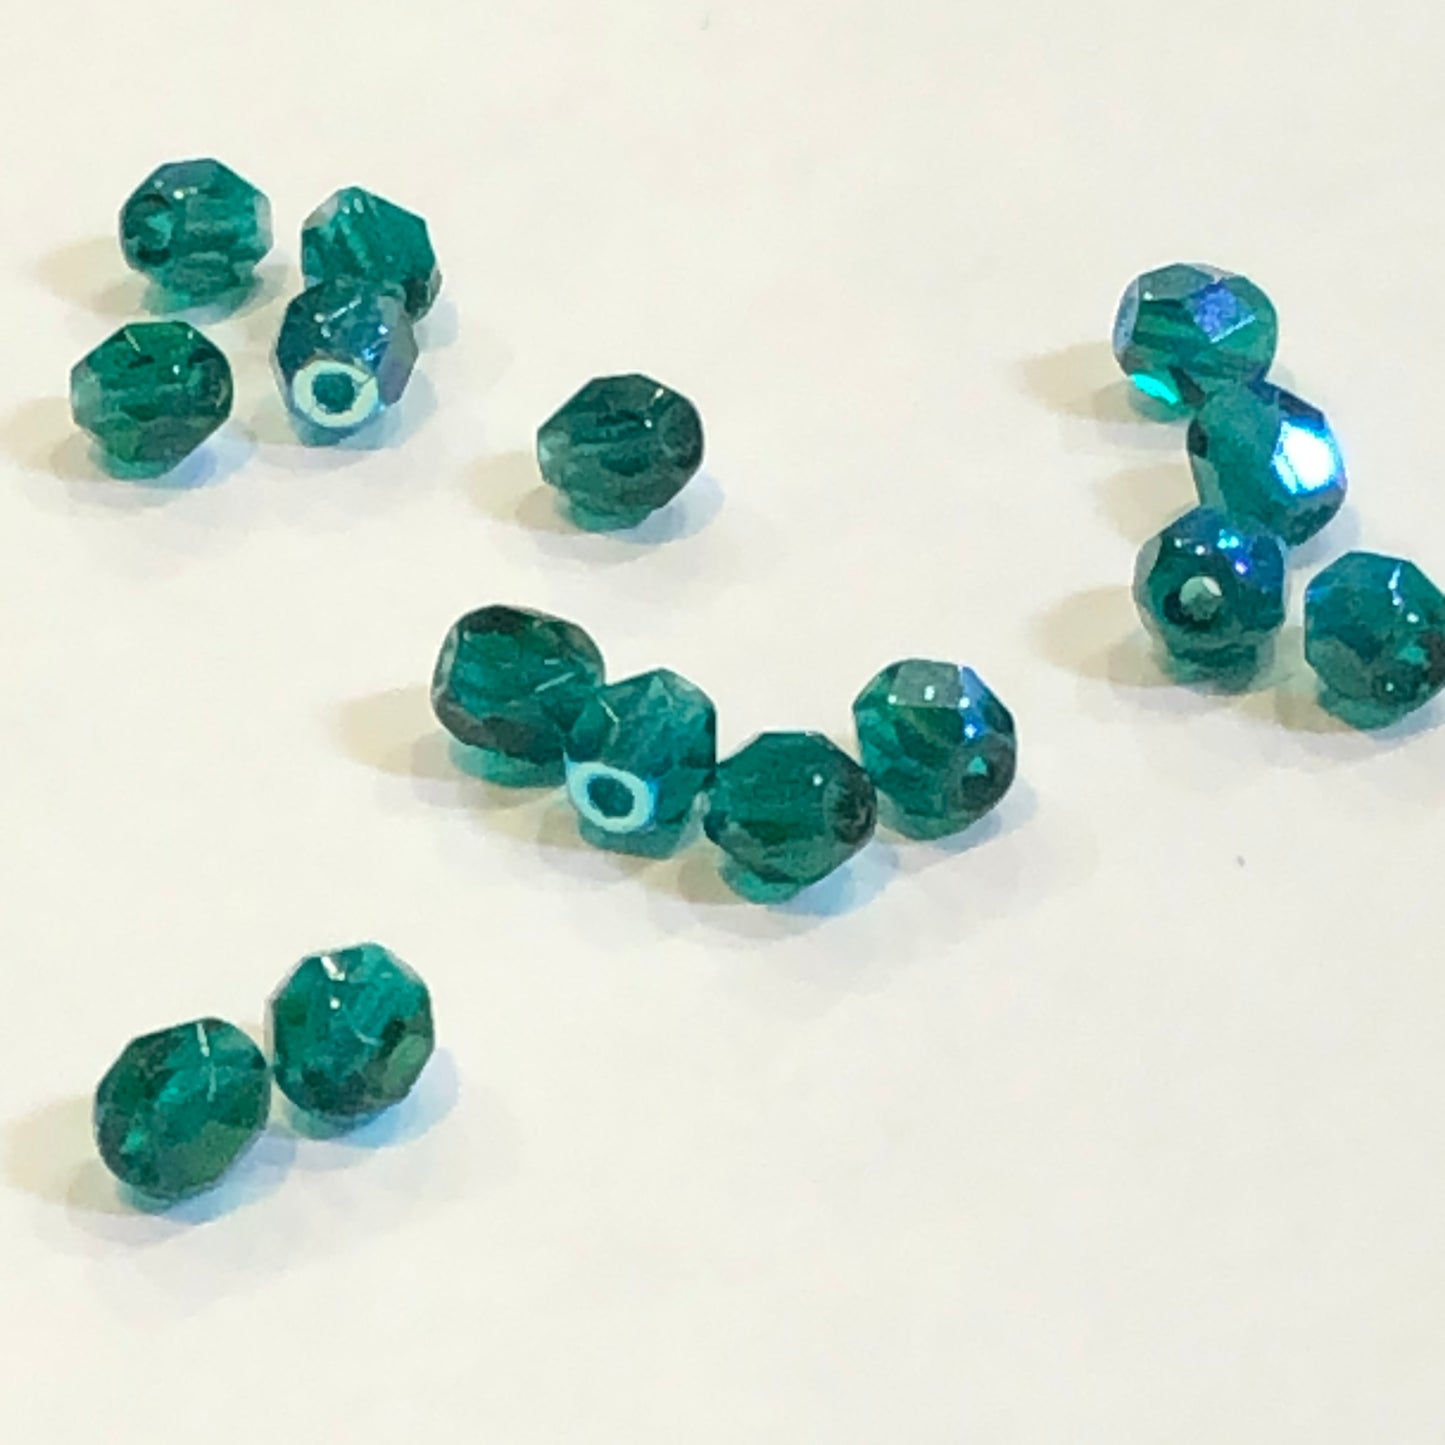 Czech Fire Polish 04X-5014 Emerald Green AB Faceted Round Glass Beads, 4 mm - 50 Beads